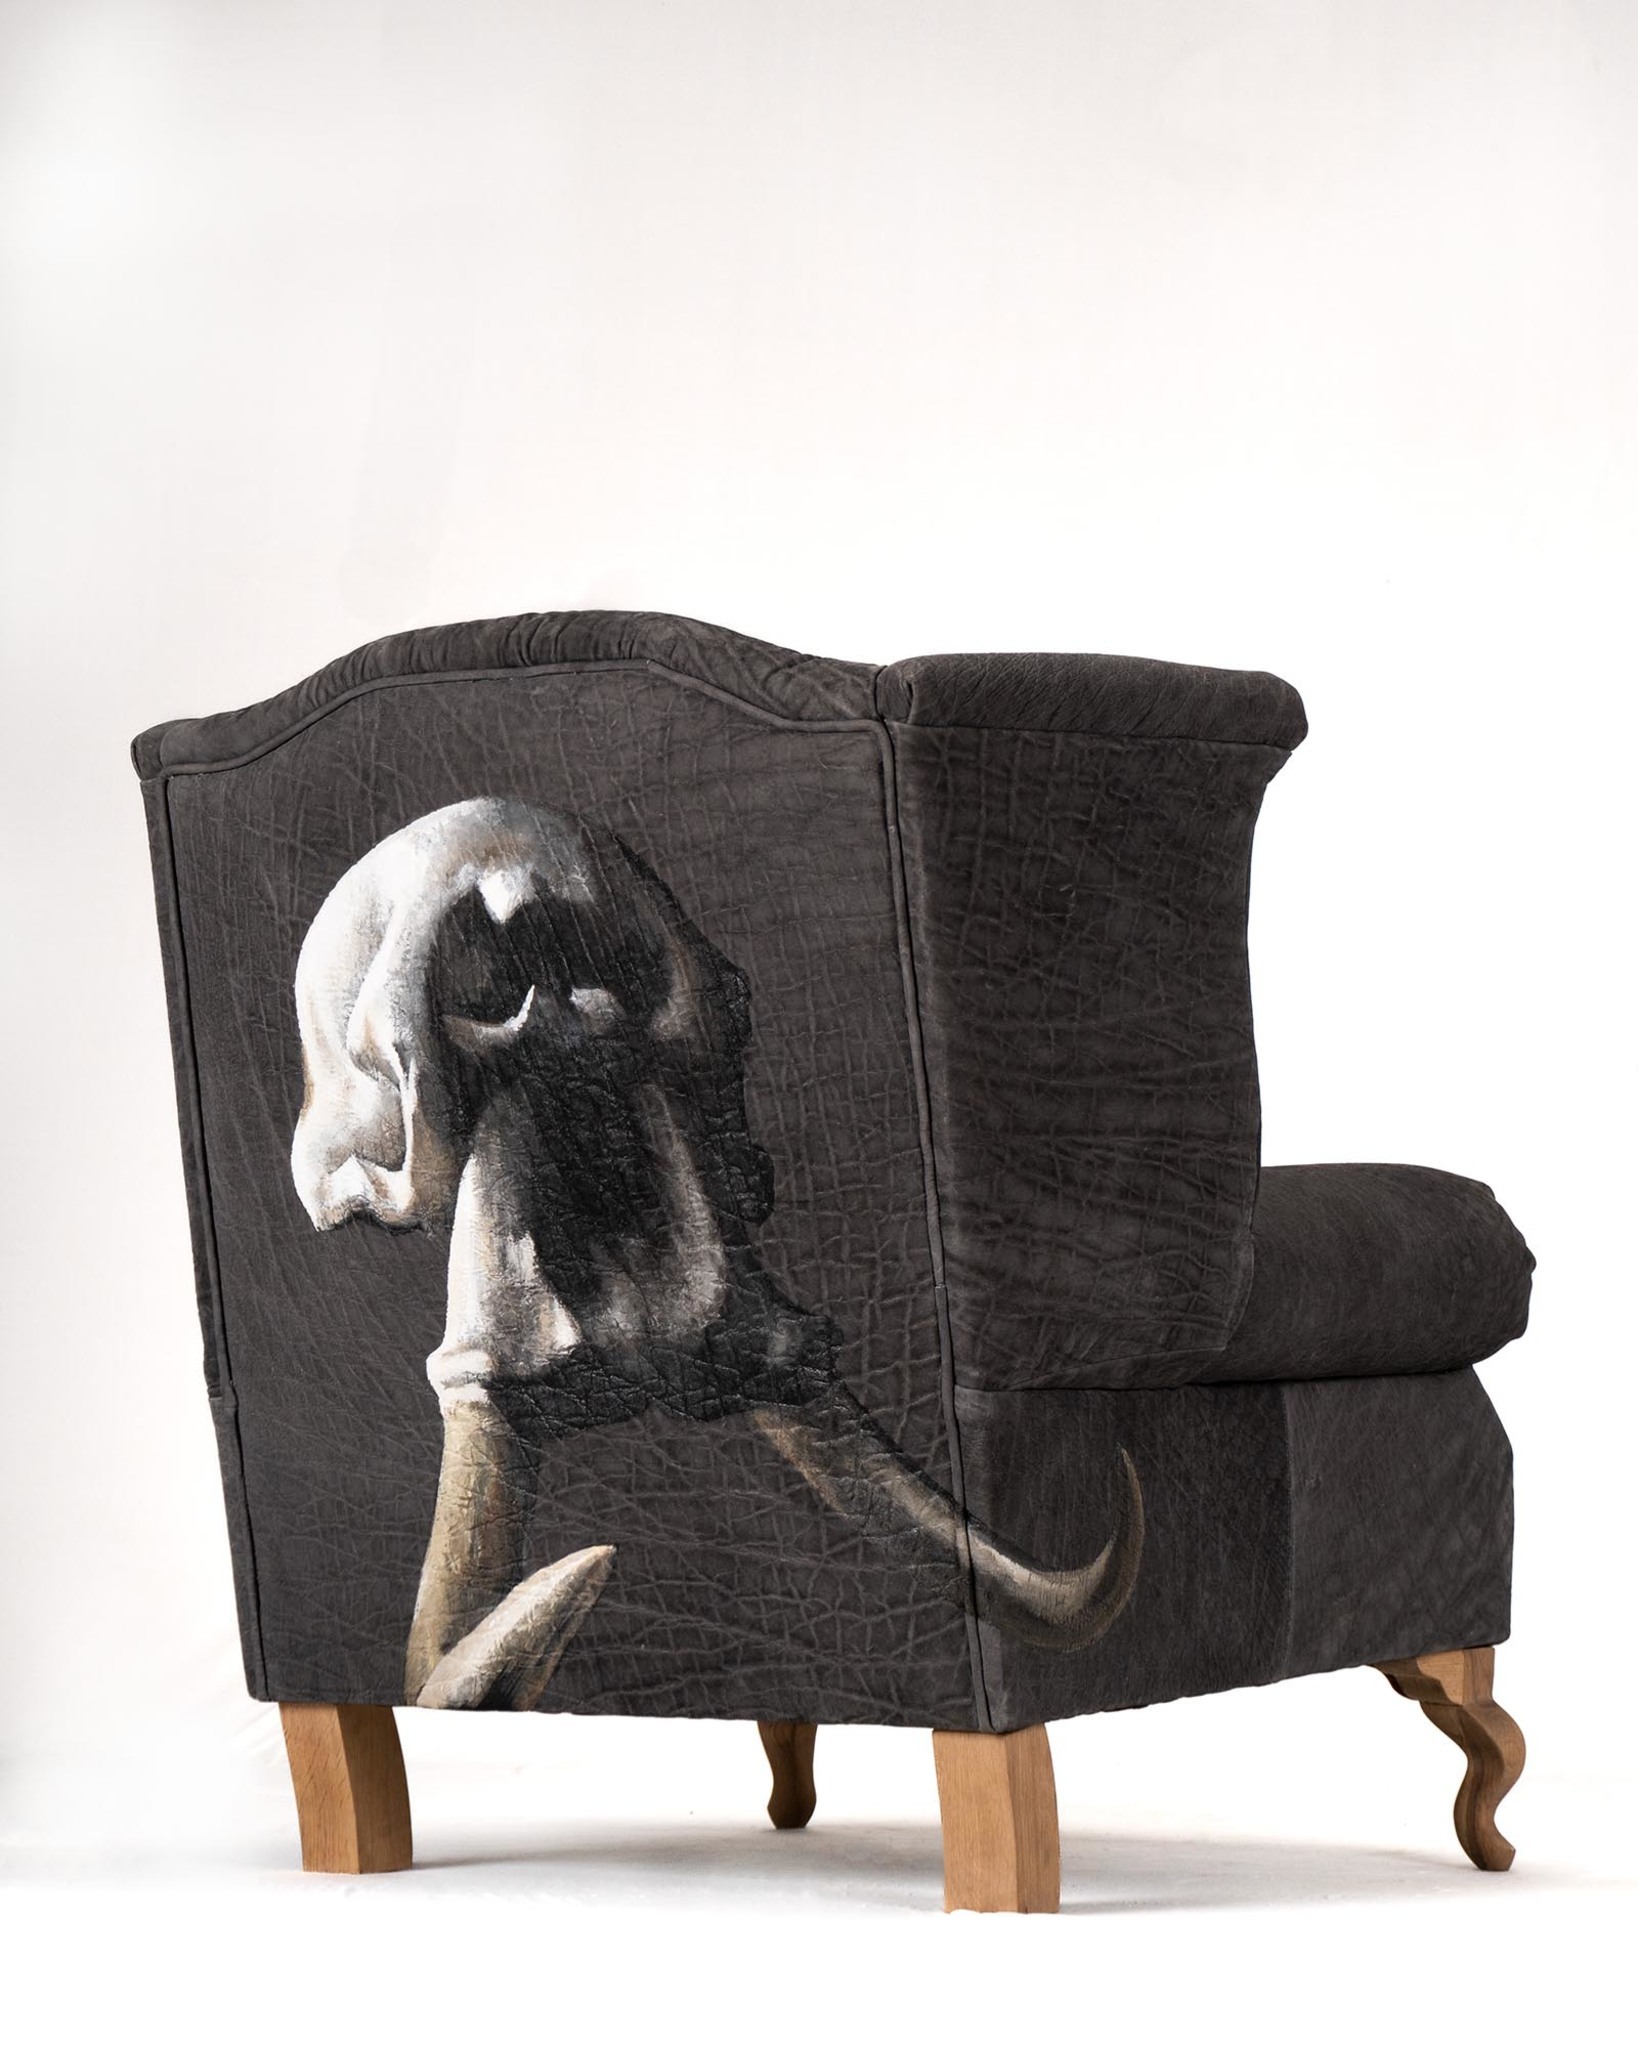 Splitting Image -Elephant hide wingback chair with handprinted artwork